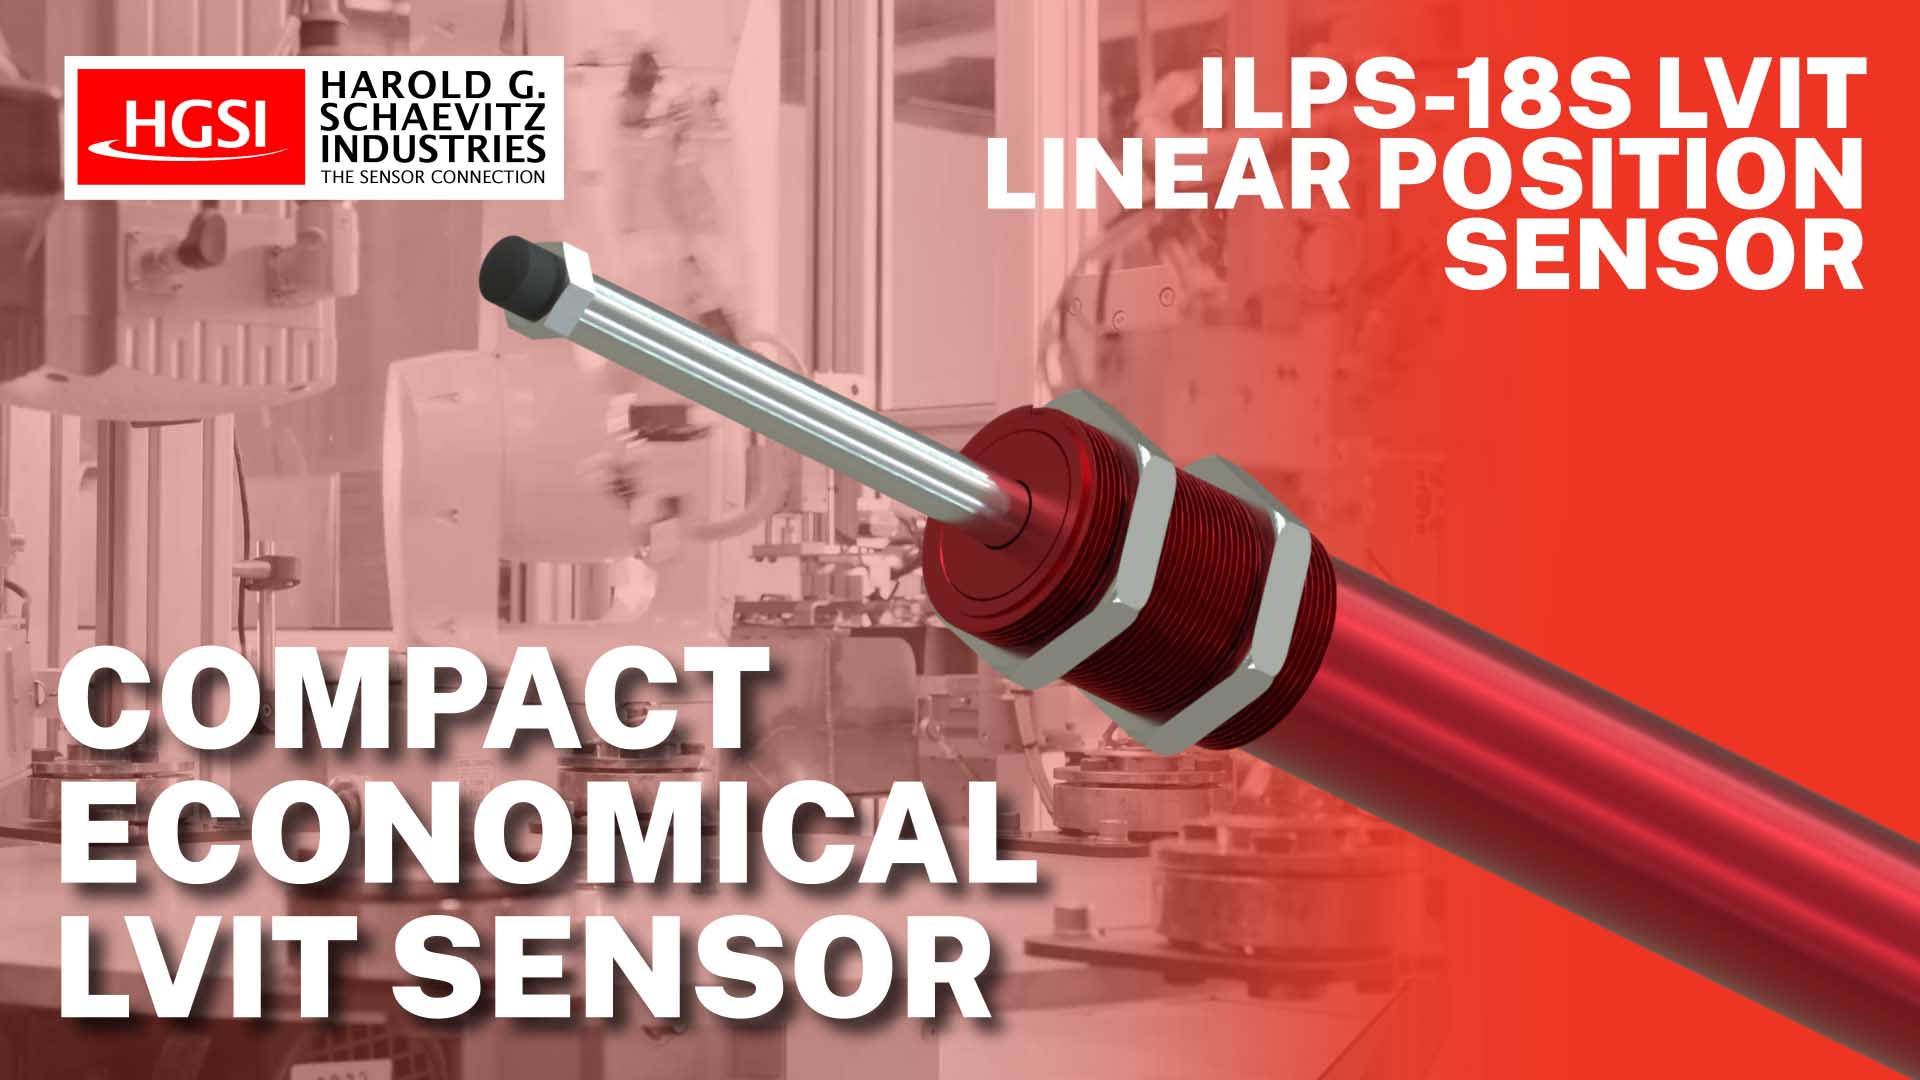 Overview of ILPS-18S Series LVIT Linear Position Sensor